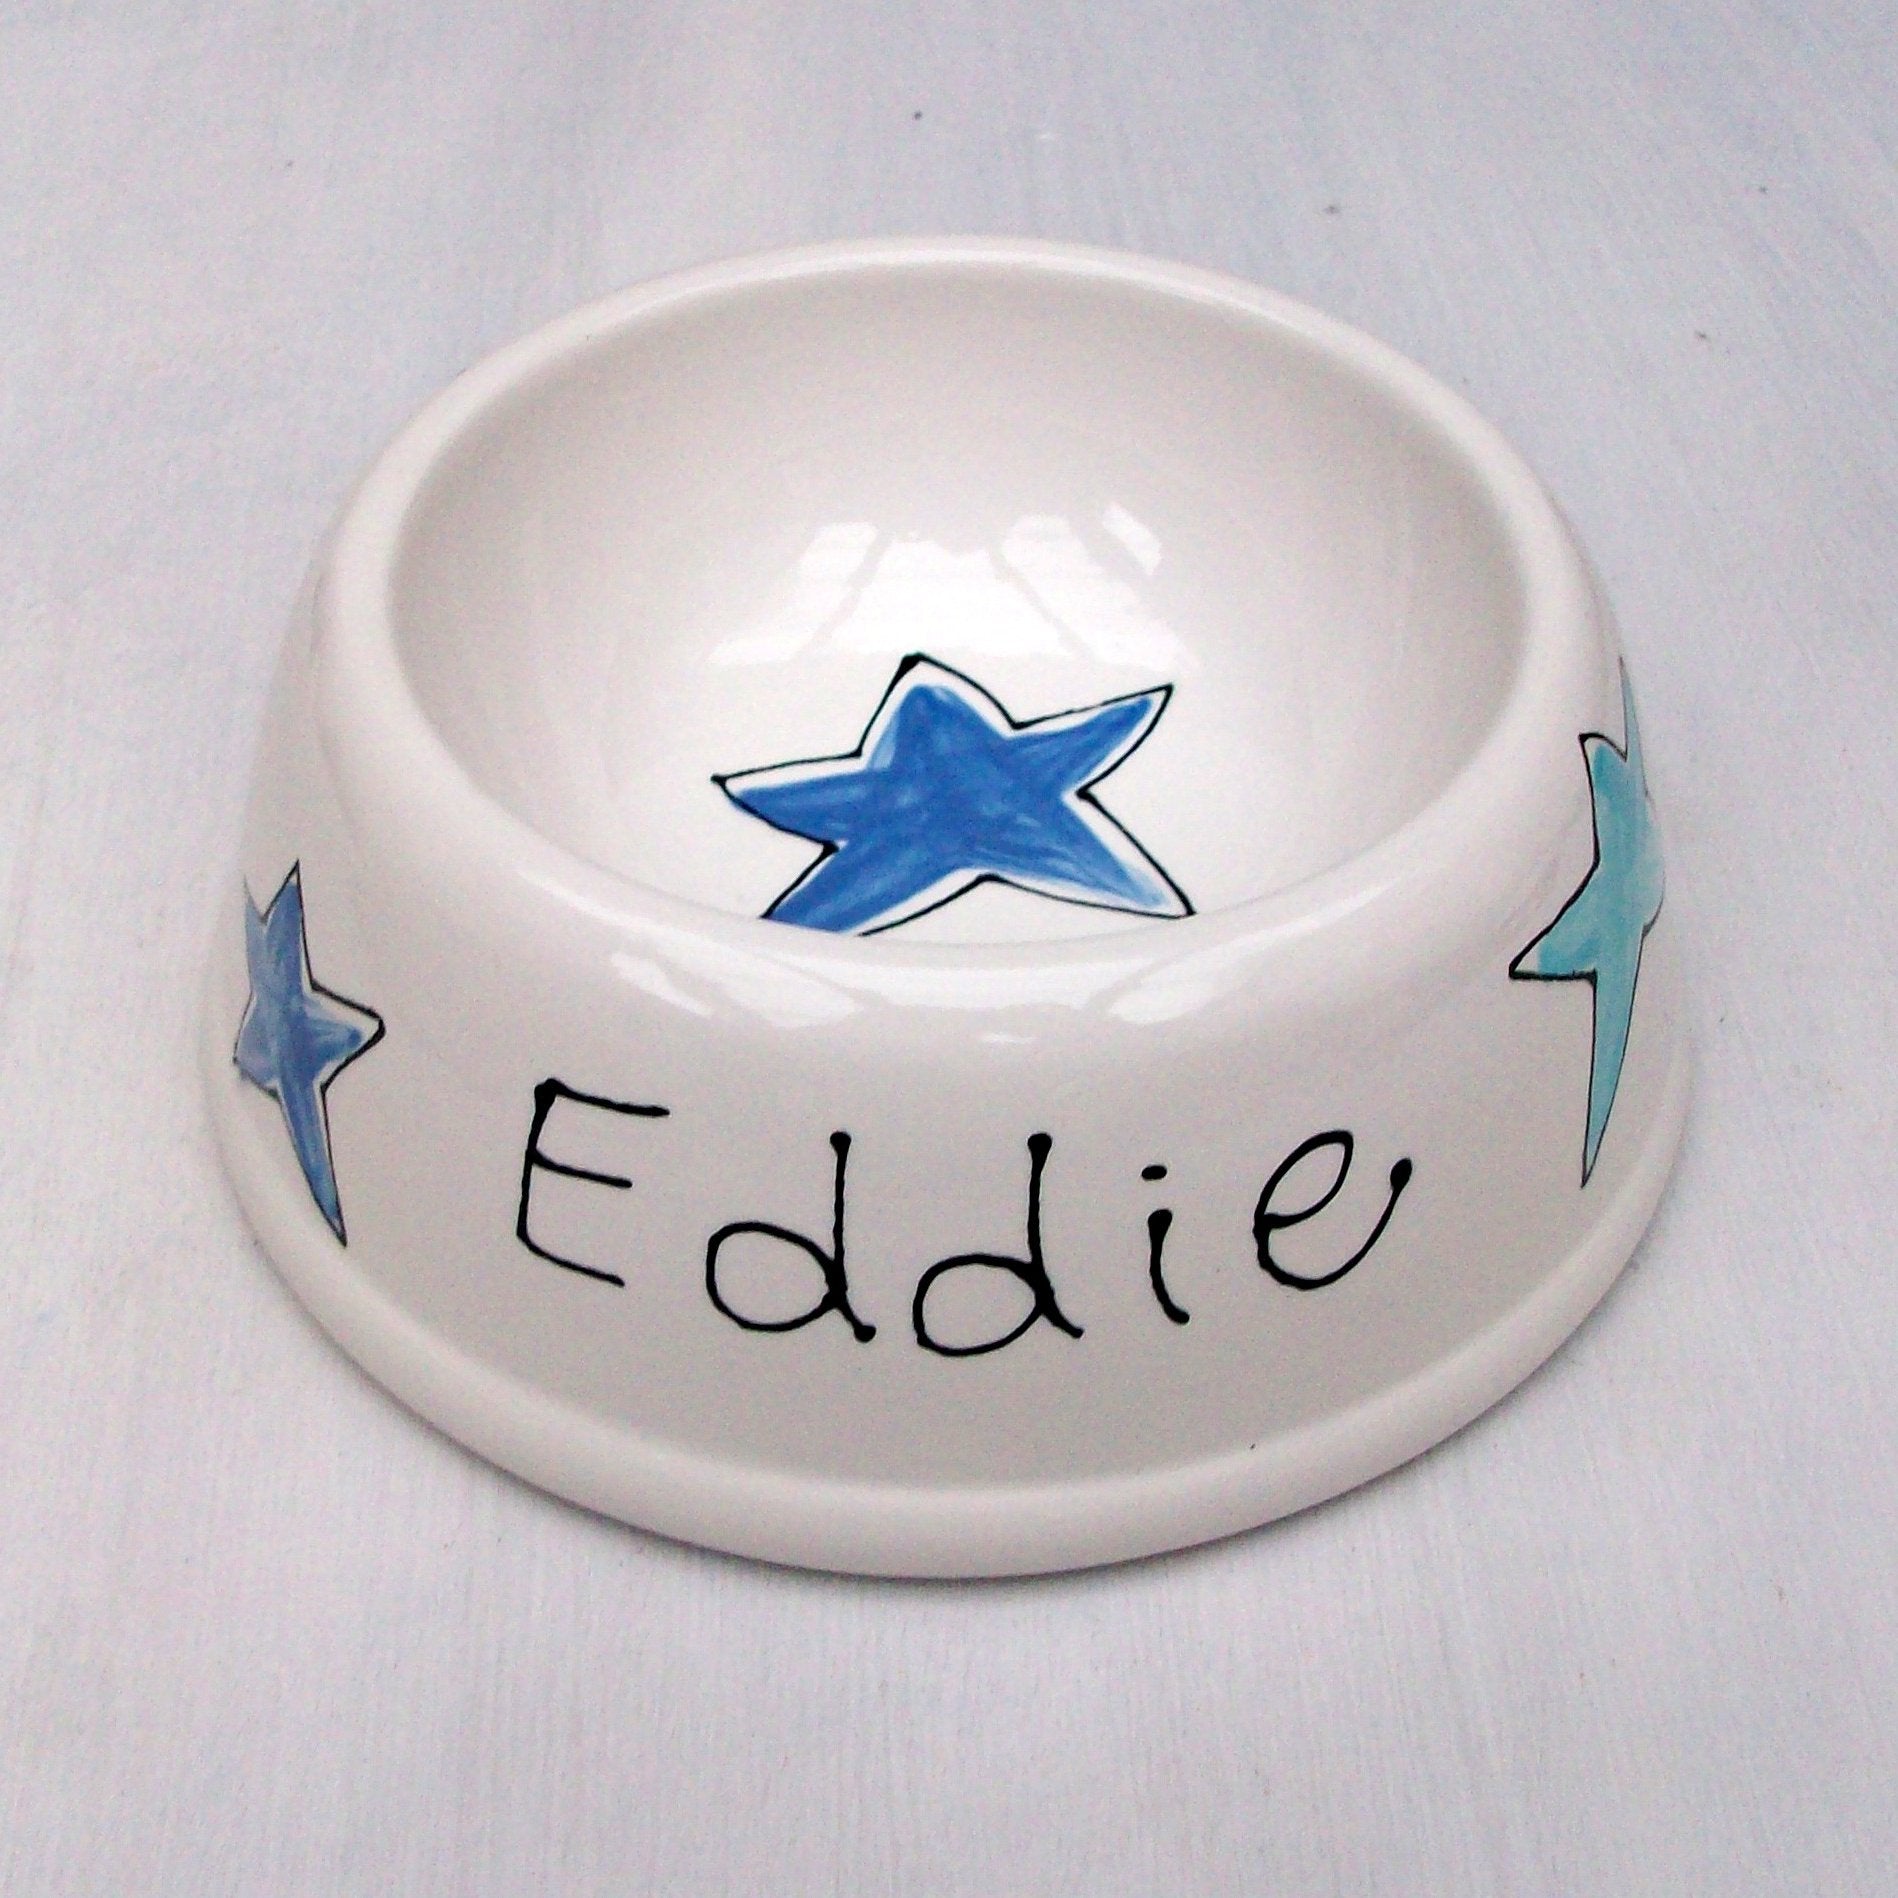 Personalised Stars Ceramic Dog Bowl